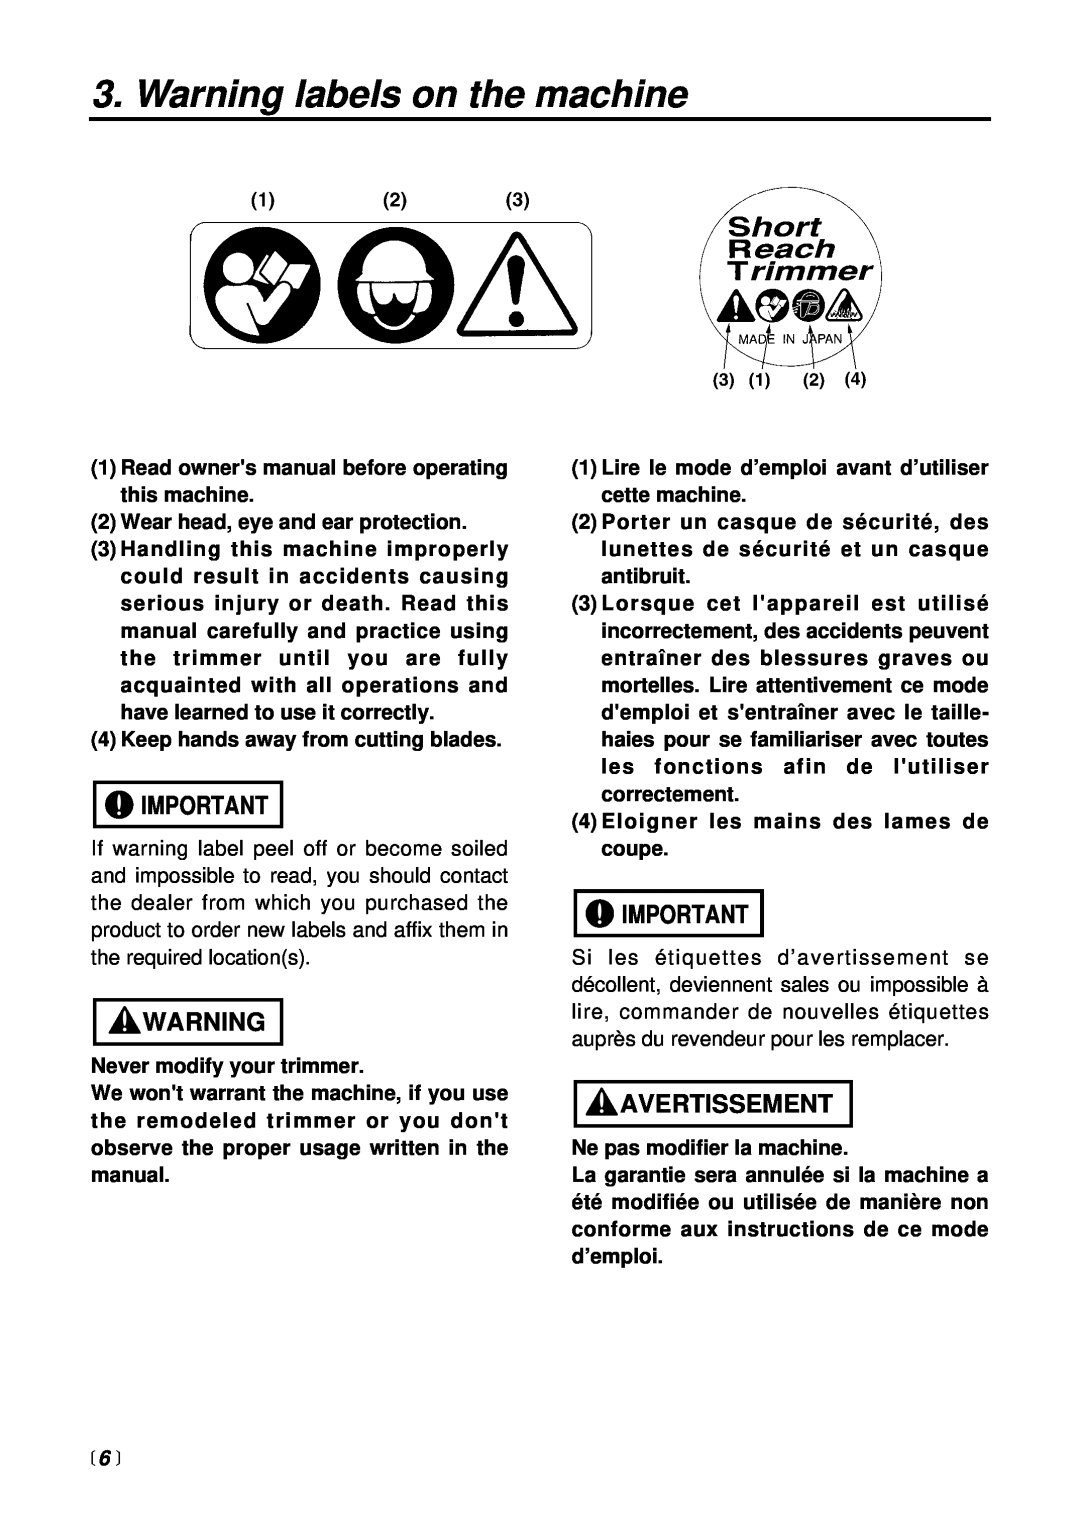 RedMax SRTZ2500 manual Warning labels on the machine, Avertissement,  6  